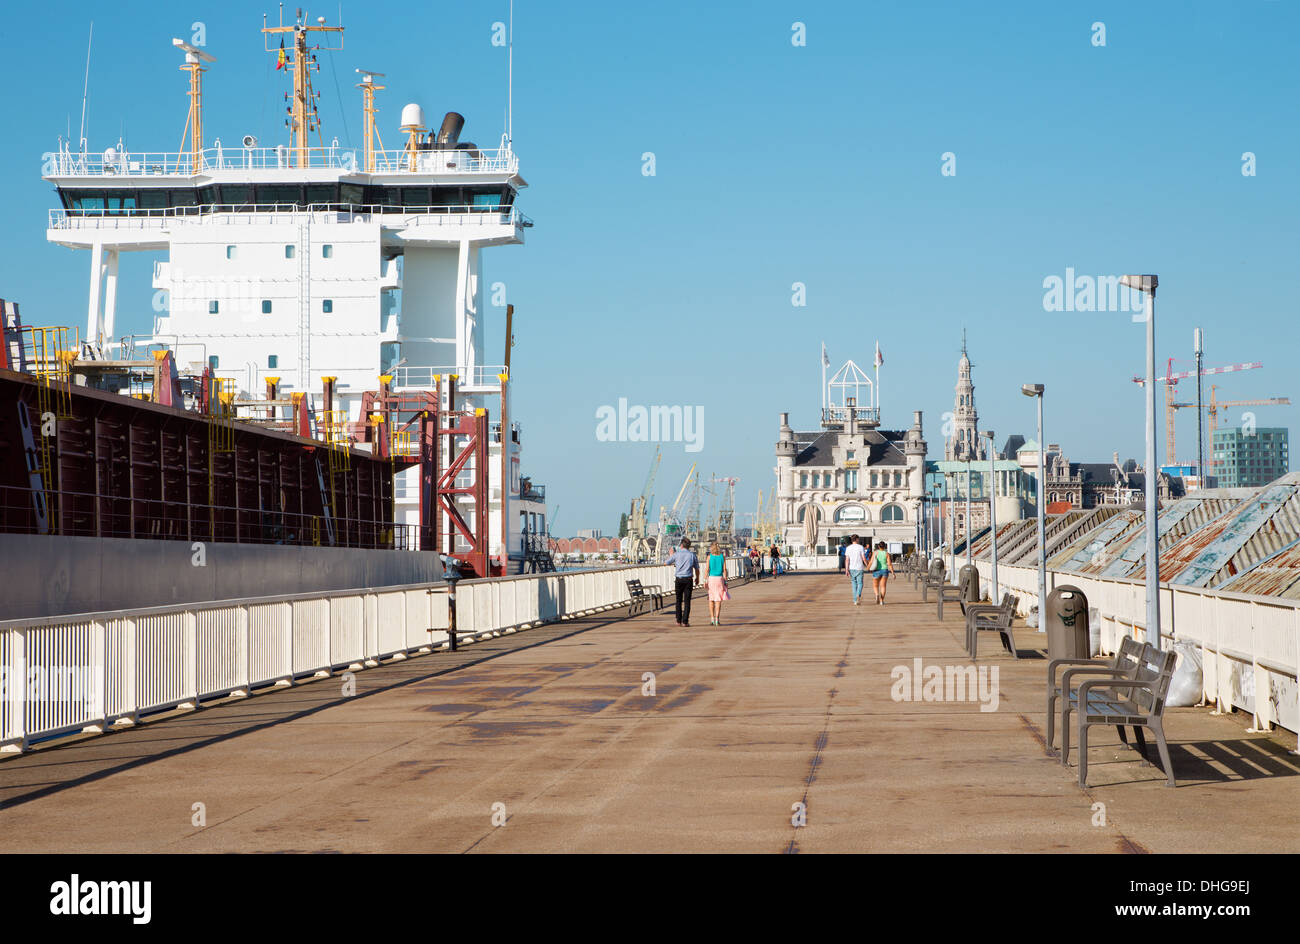 Amberes, Bélgica - 5 de septiembre: Paseo Marítimo y grandes barcos de carga en Septiembre 5, 2013 en Antwerp, Bélgica. Foto de stock